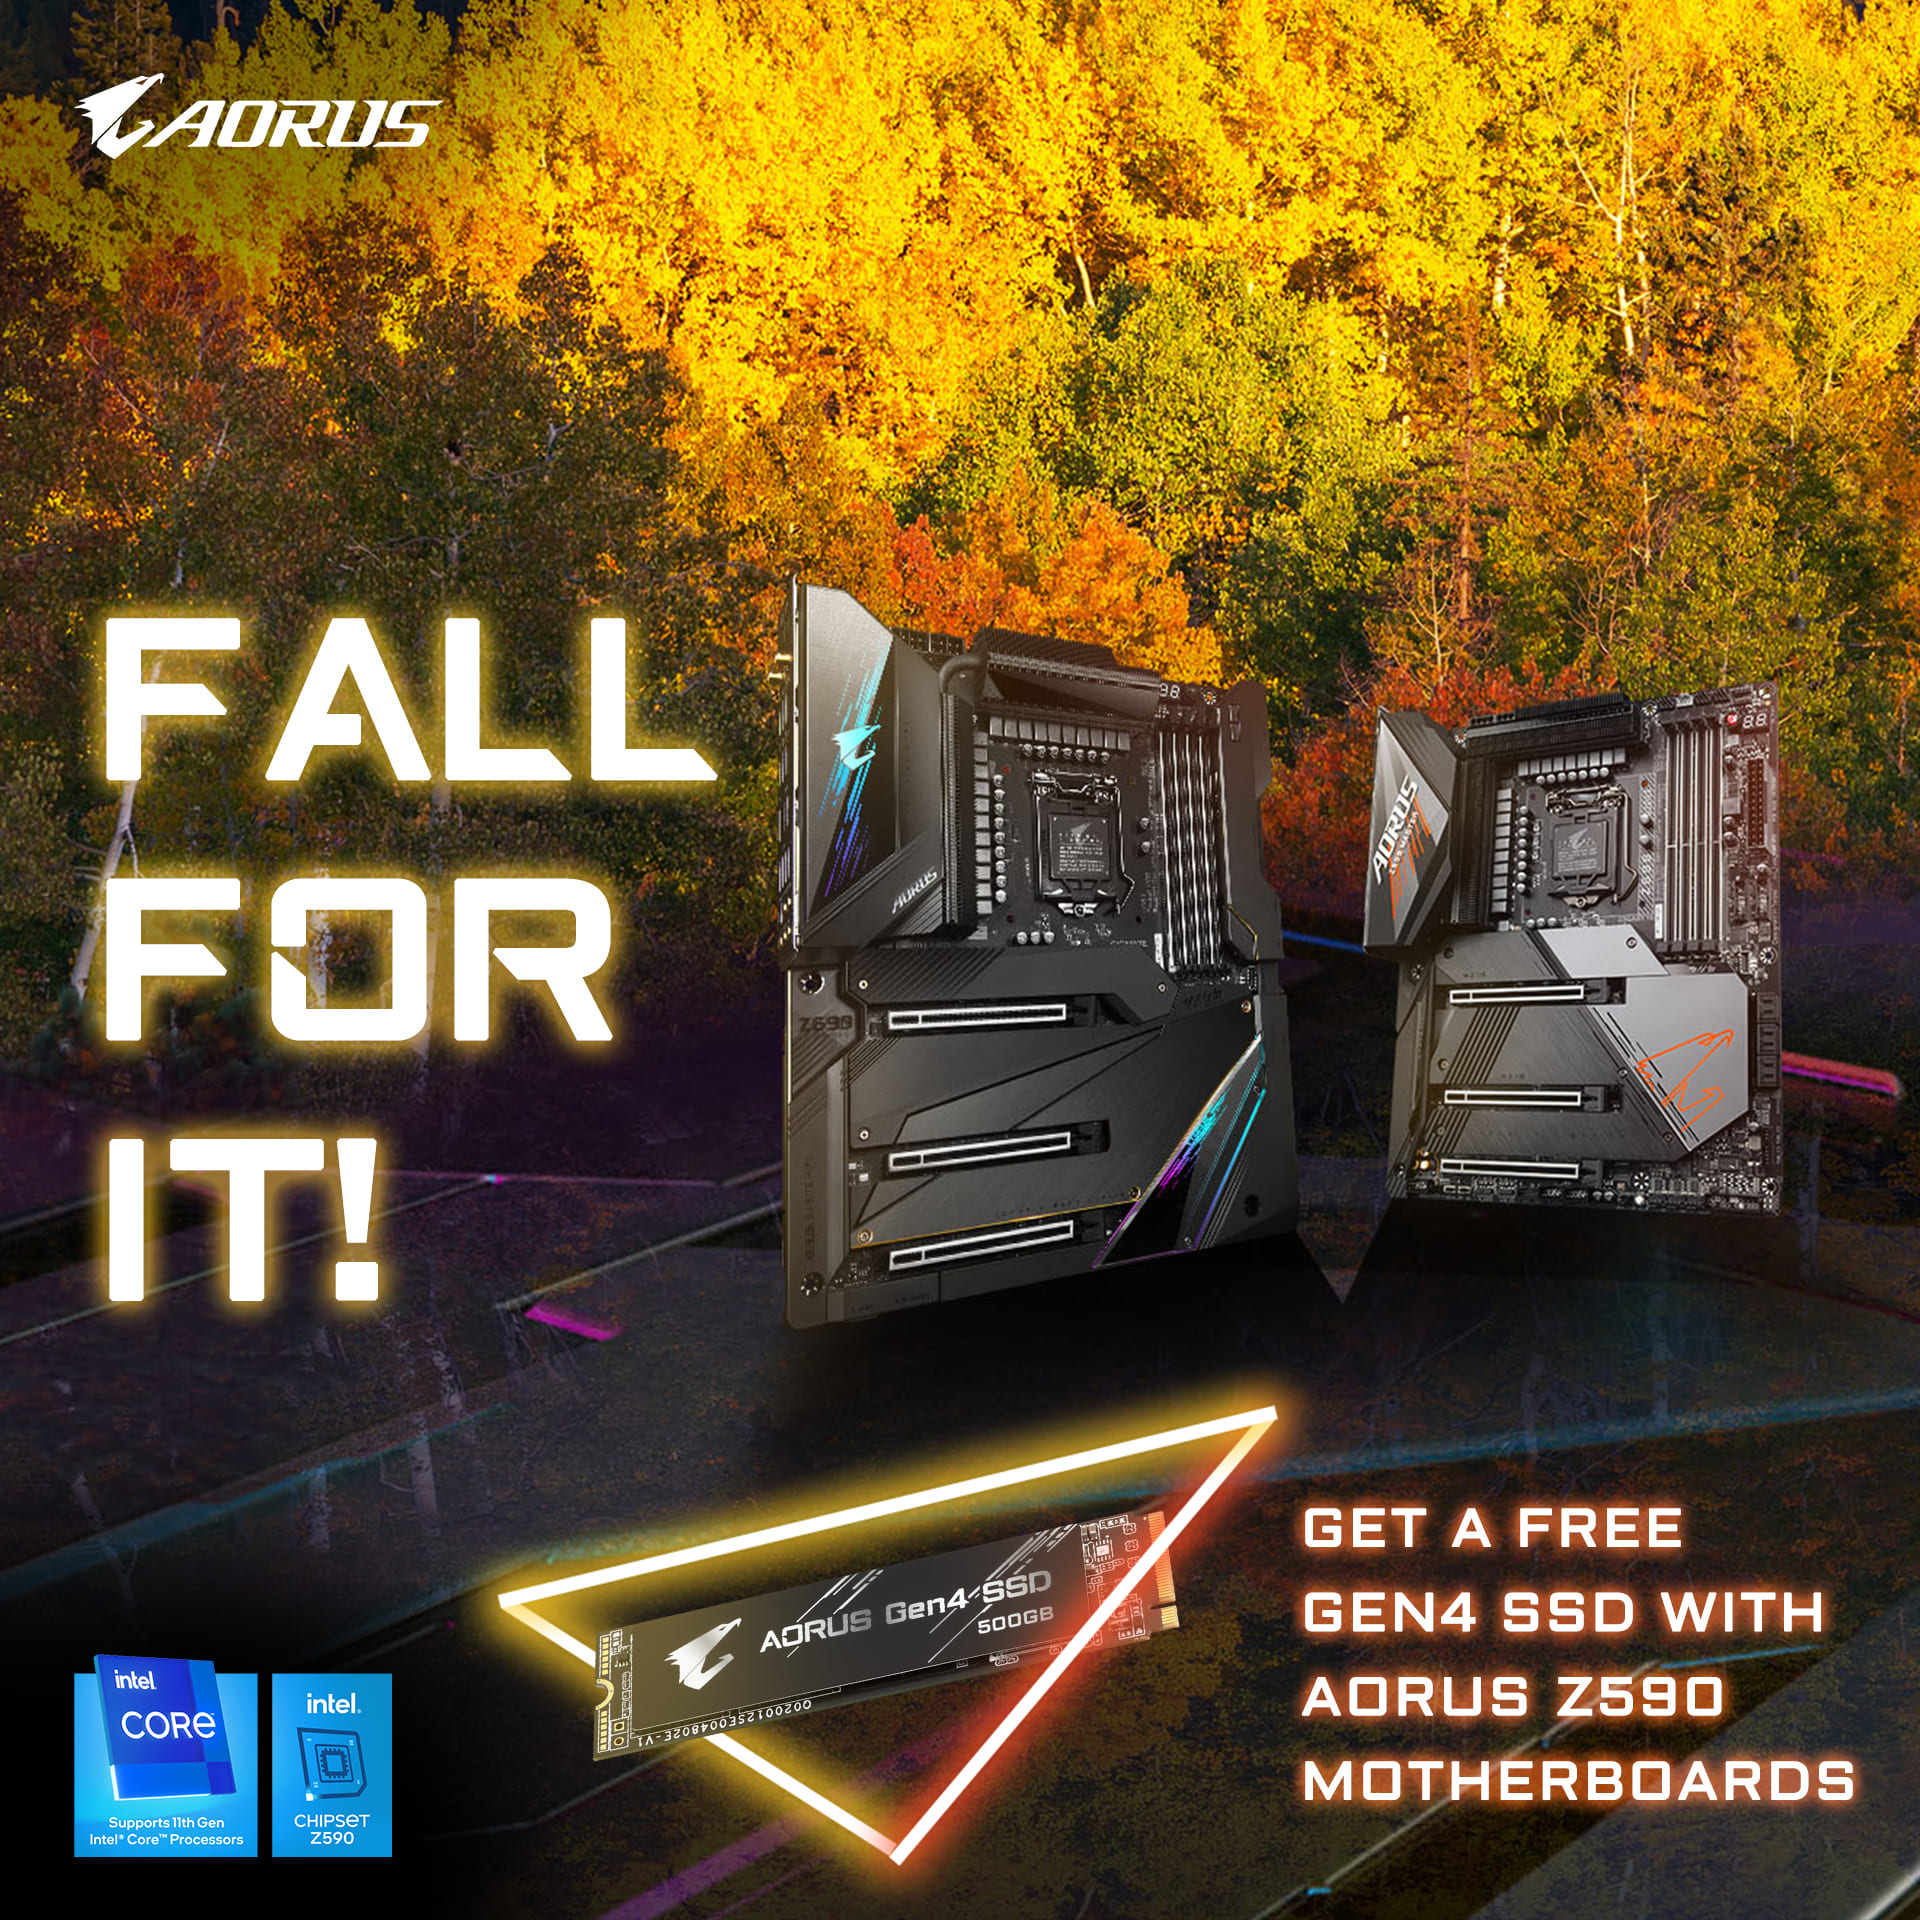 Get a free 500GB Gen4 SSD with AORUS Z590